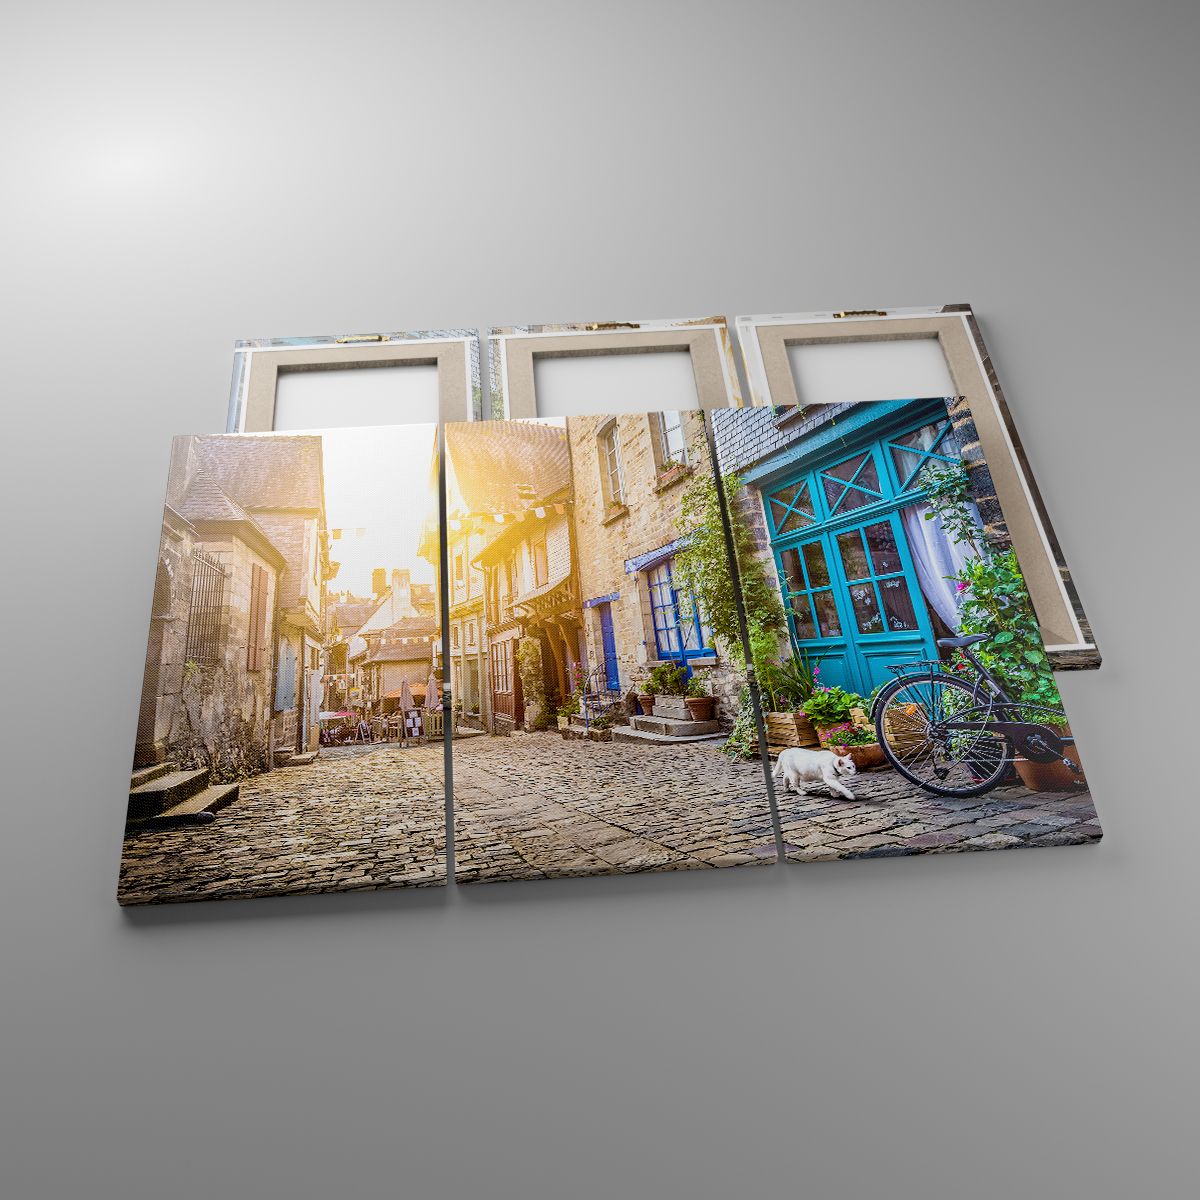 Leinwandbild Stadt, Leinwandbild Frankreich, Leinwandbild Die Architektur, Leinwandbild Gasse, Leinwandbild Sonnenstrahlen